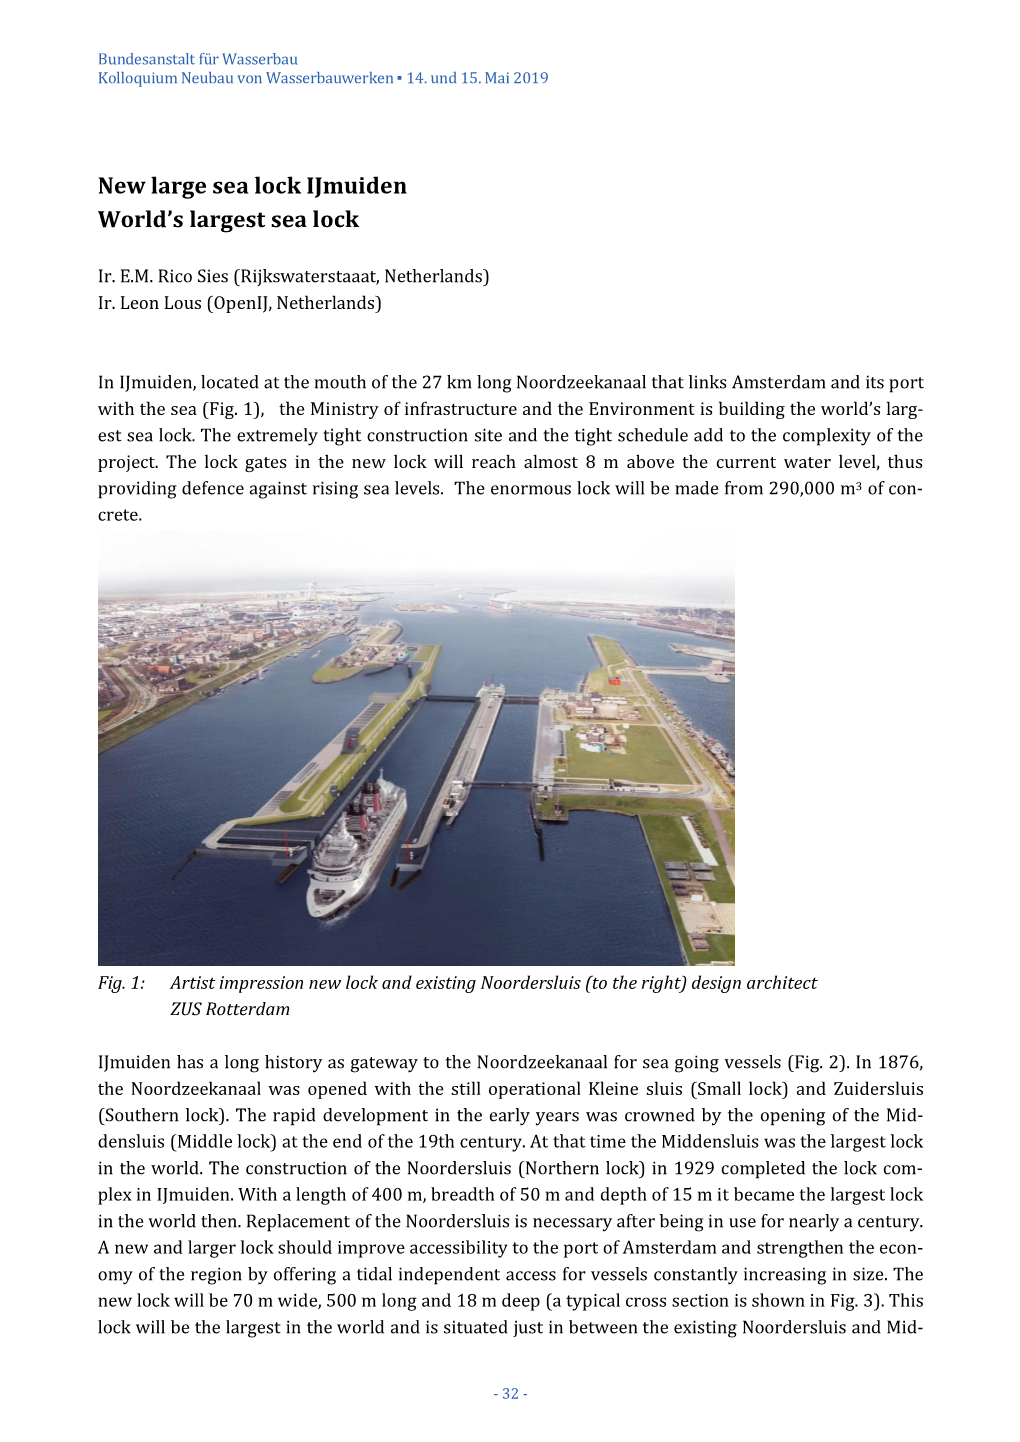 New Large Sea Lock Ijmuiden World's Largest Sea Lock